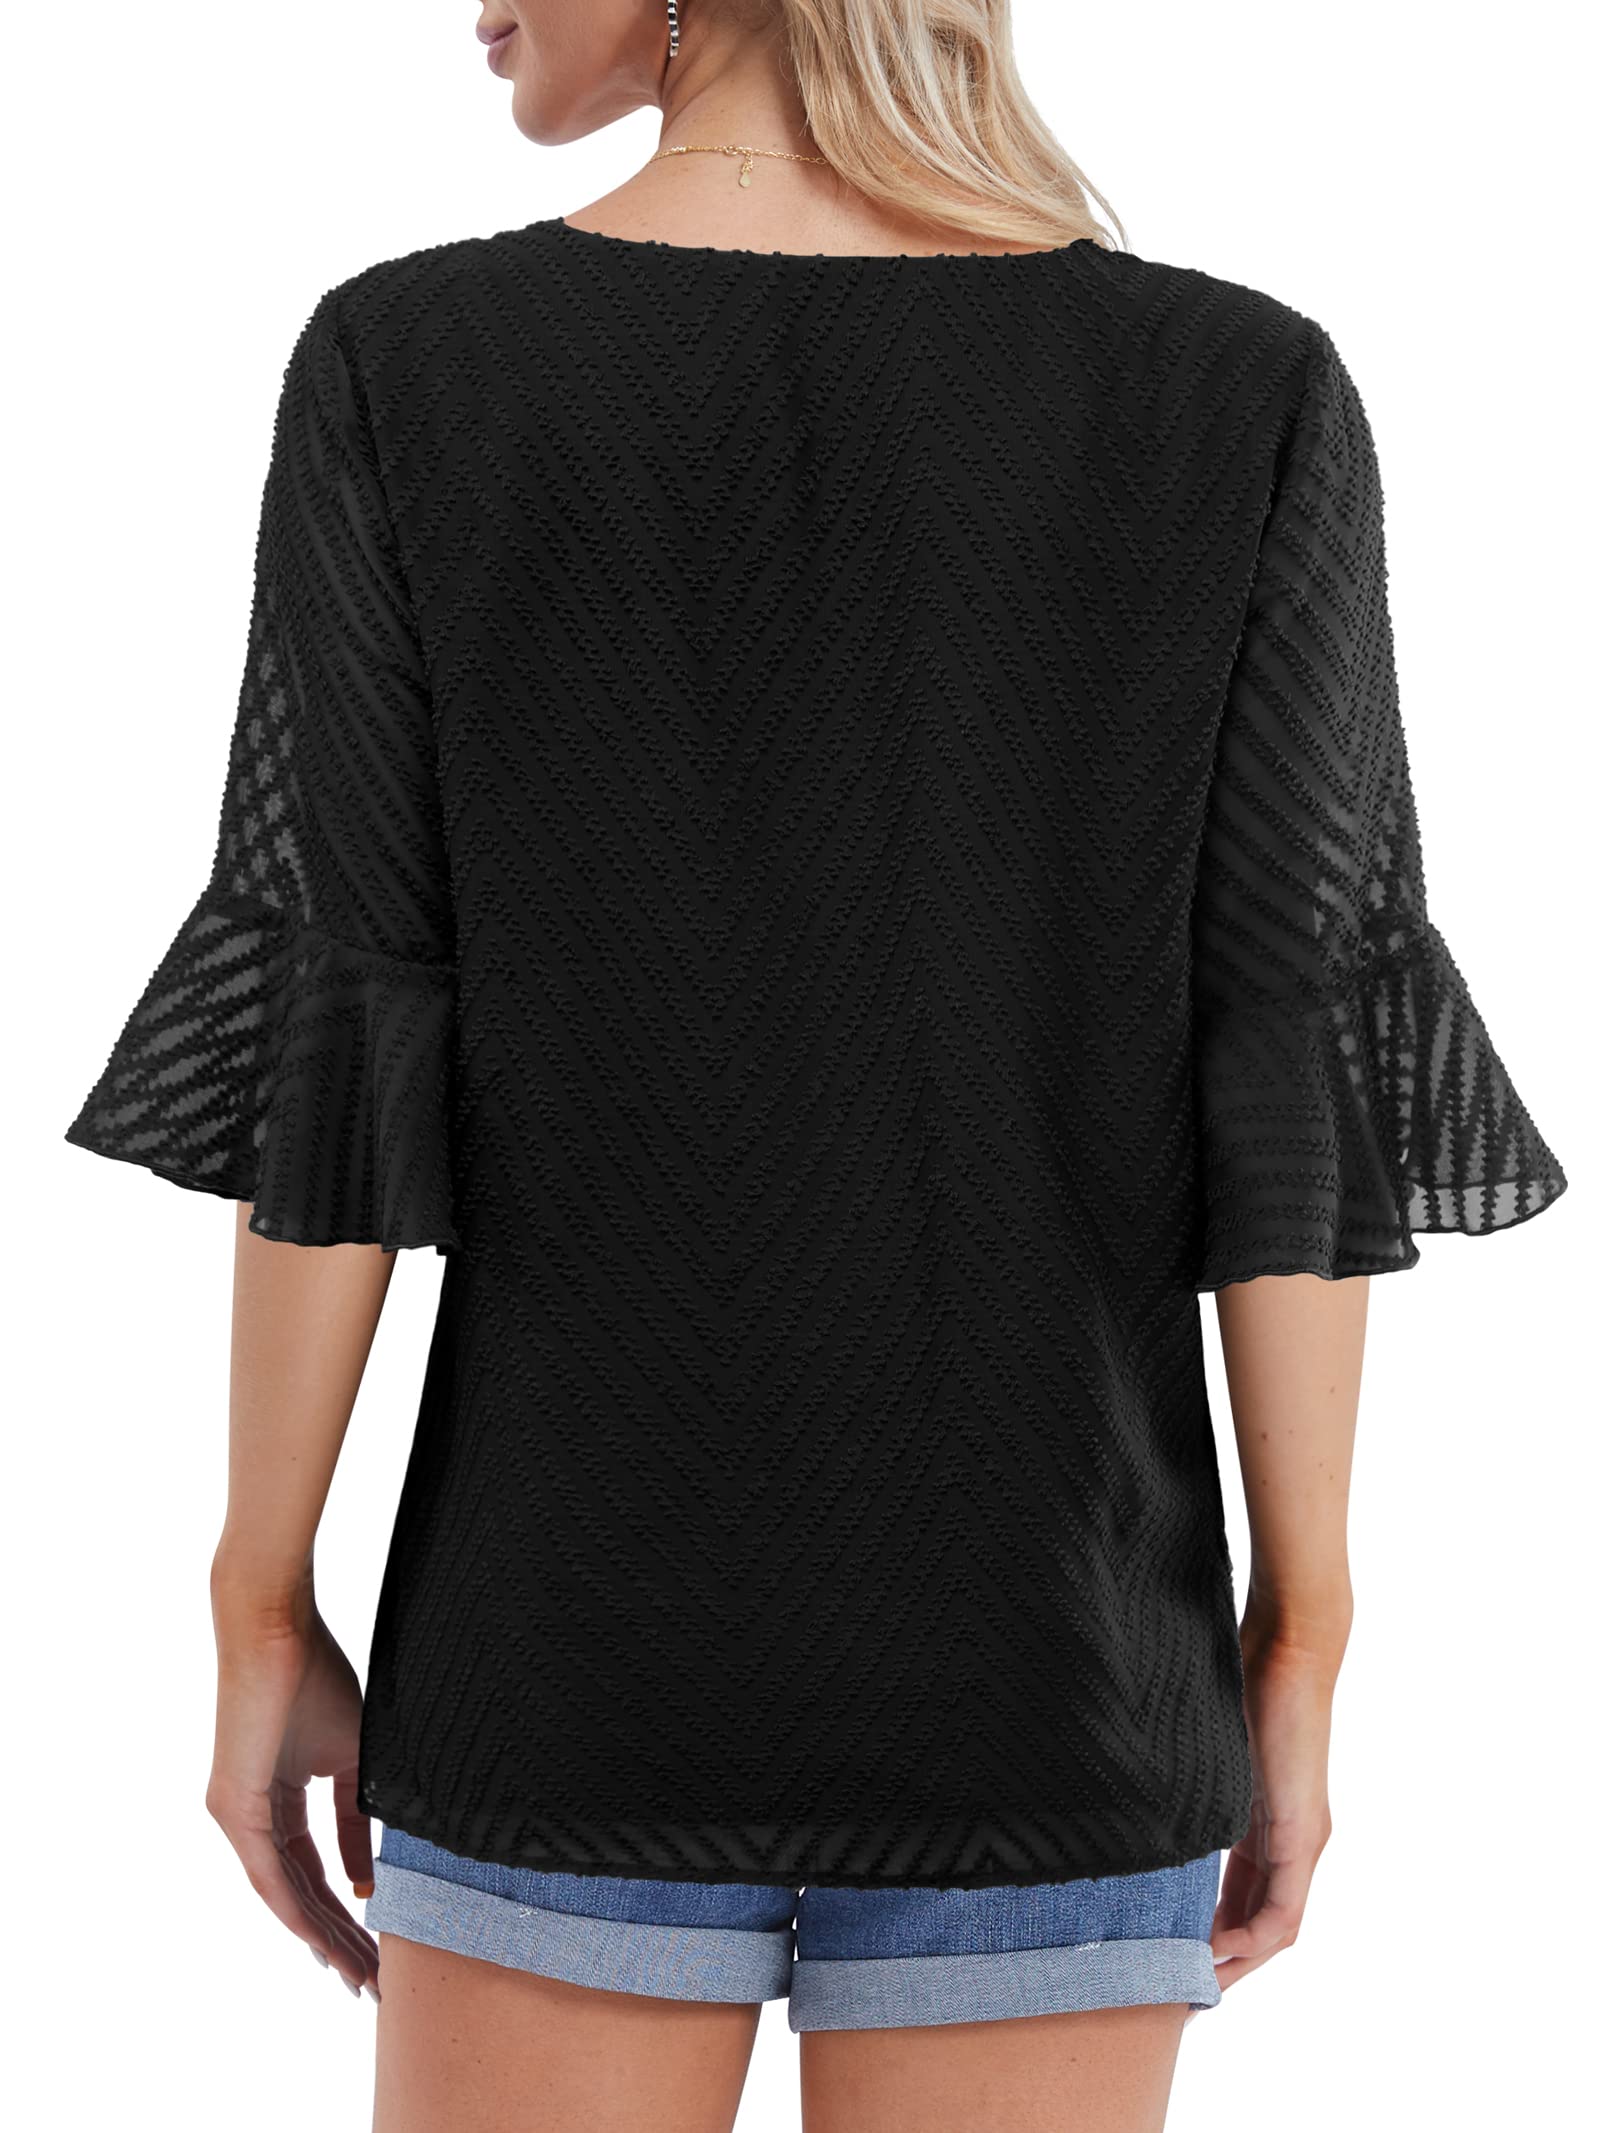 BAISHENGGT Black  Chiffon Women's Summer Casual V Neck Ruffle Bell Sleeve Blouse Tops Loose Comfy T Shirt